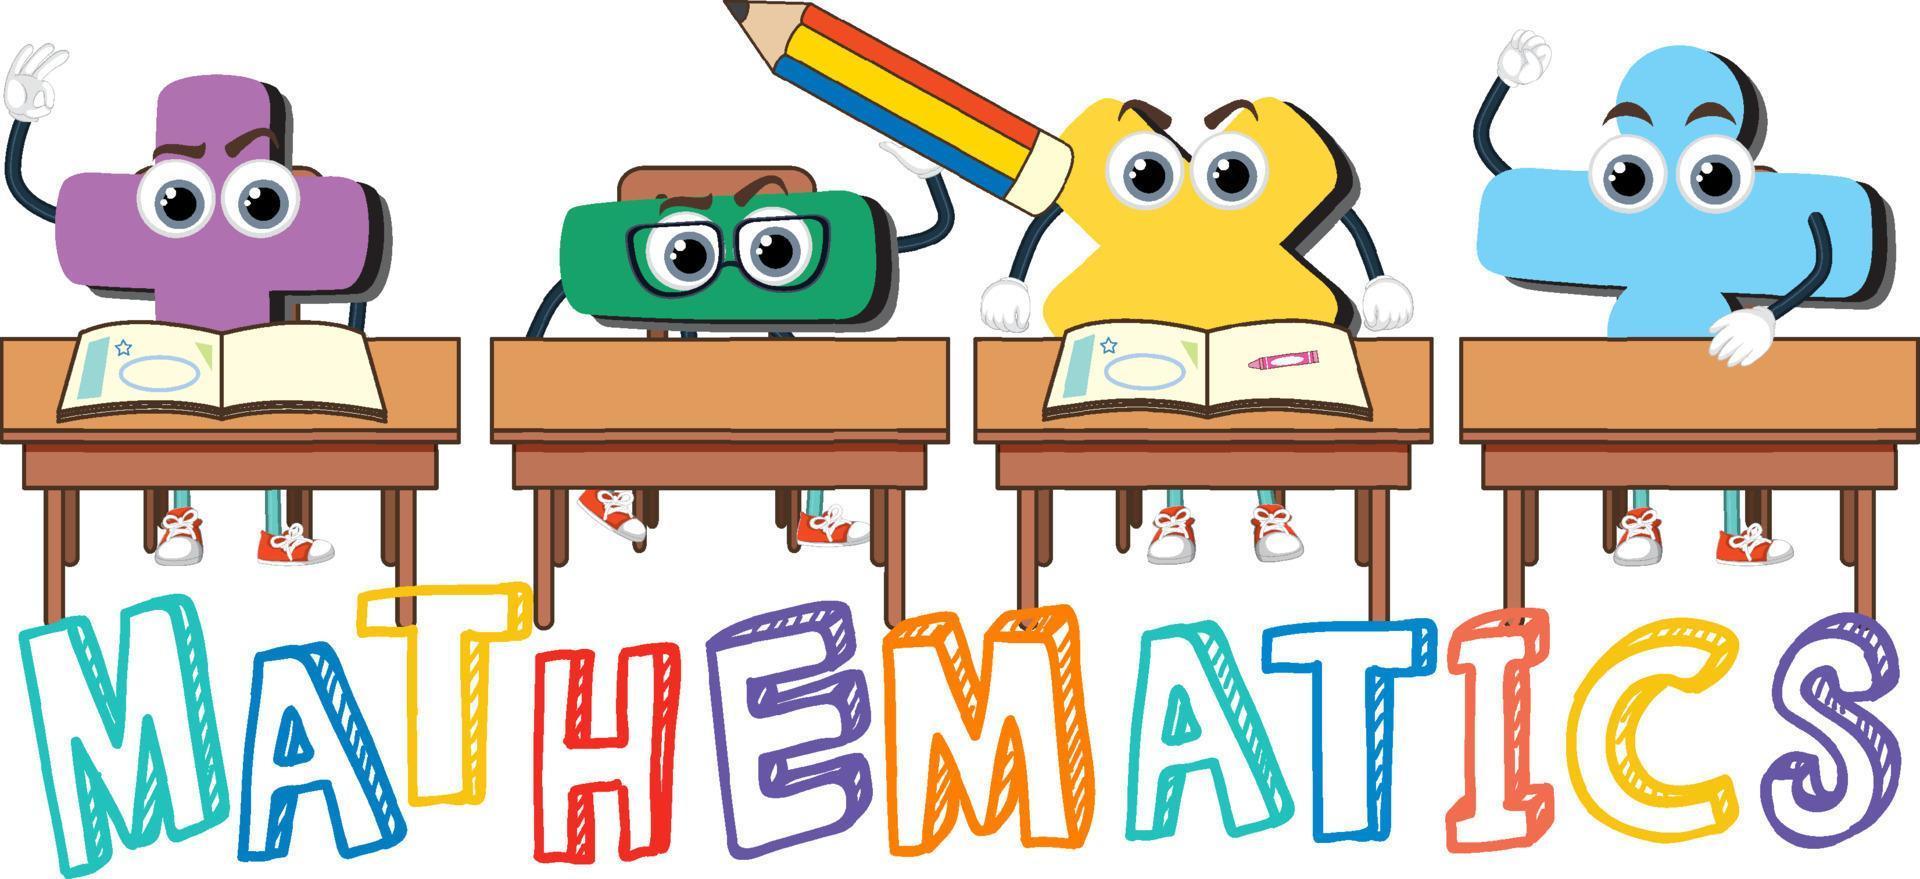 Mathematics word logo in cartoon style vector